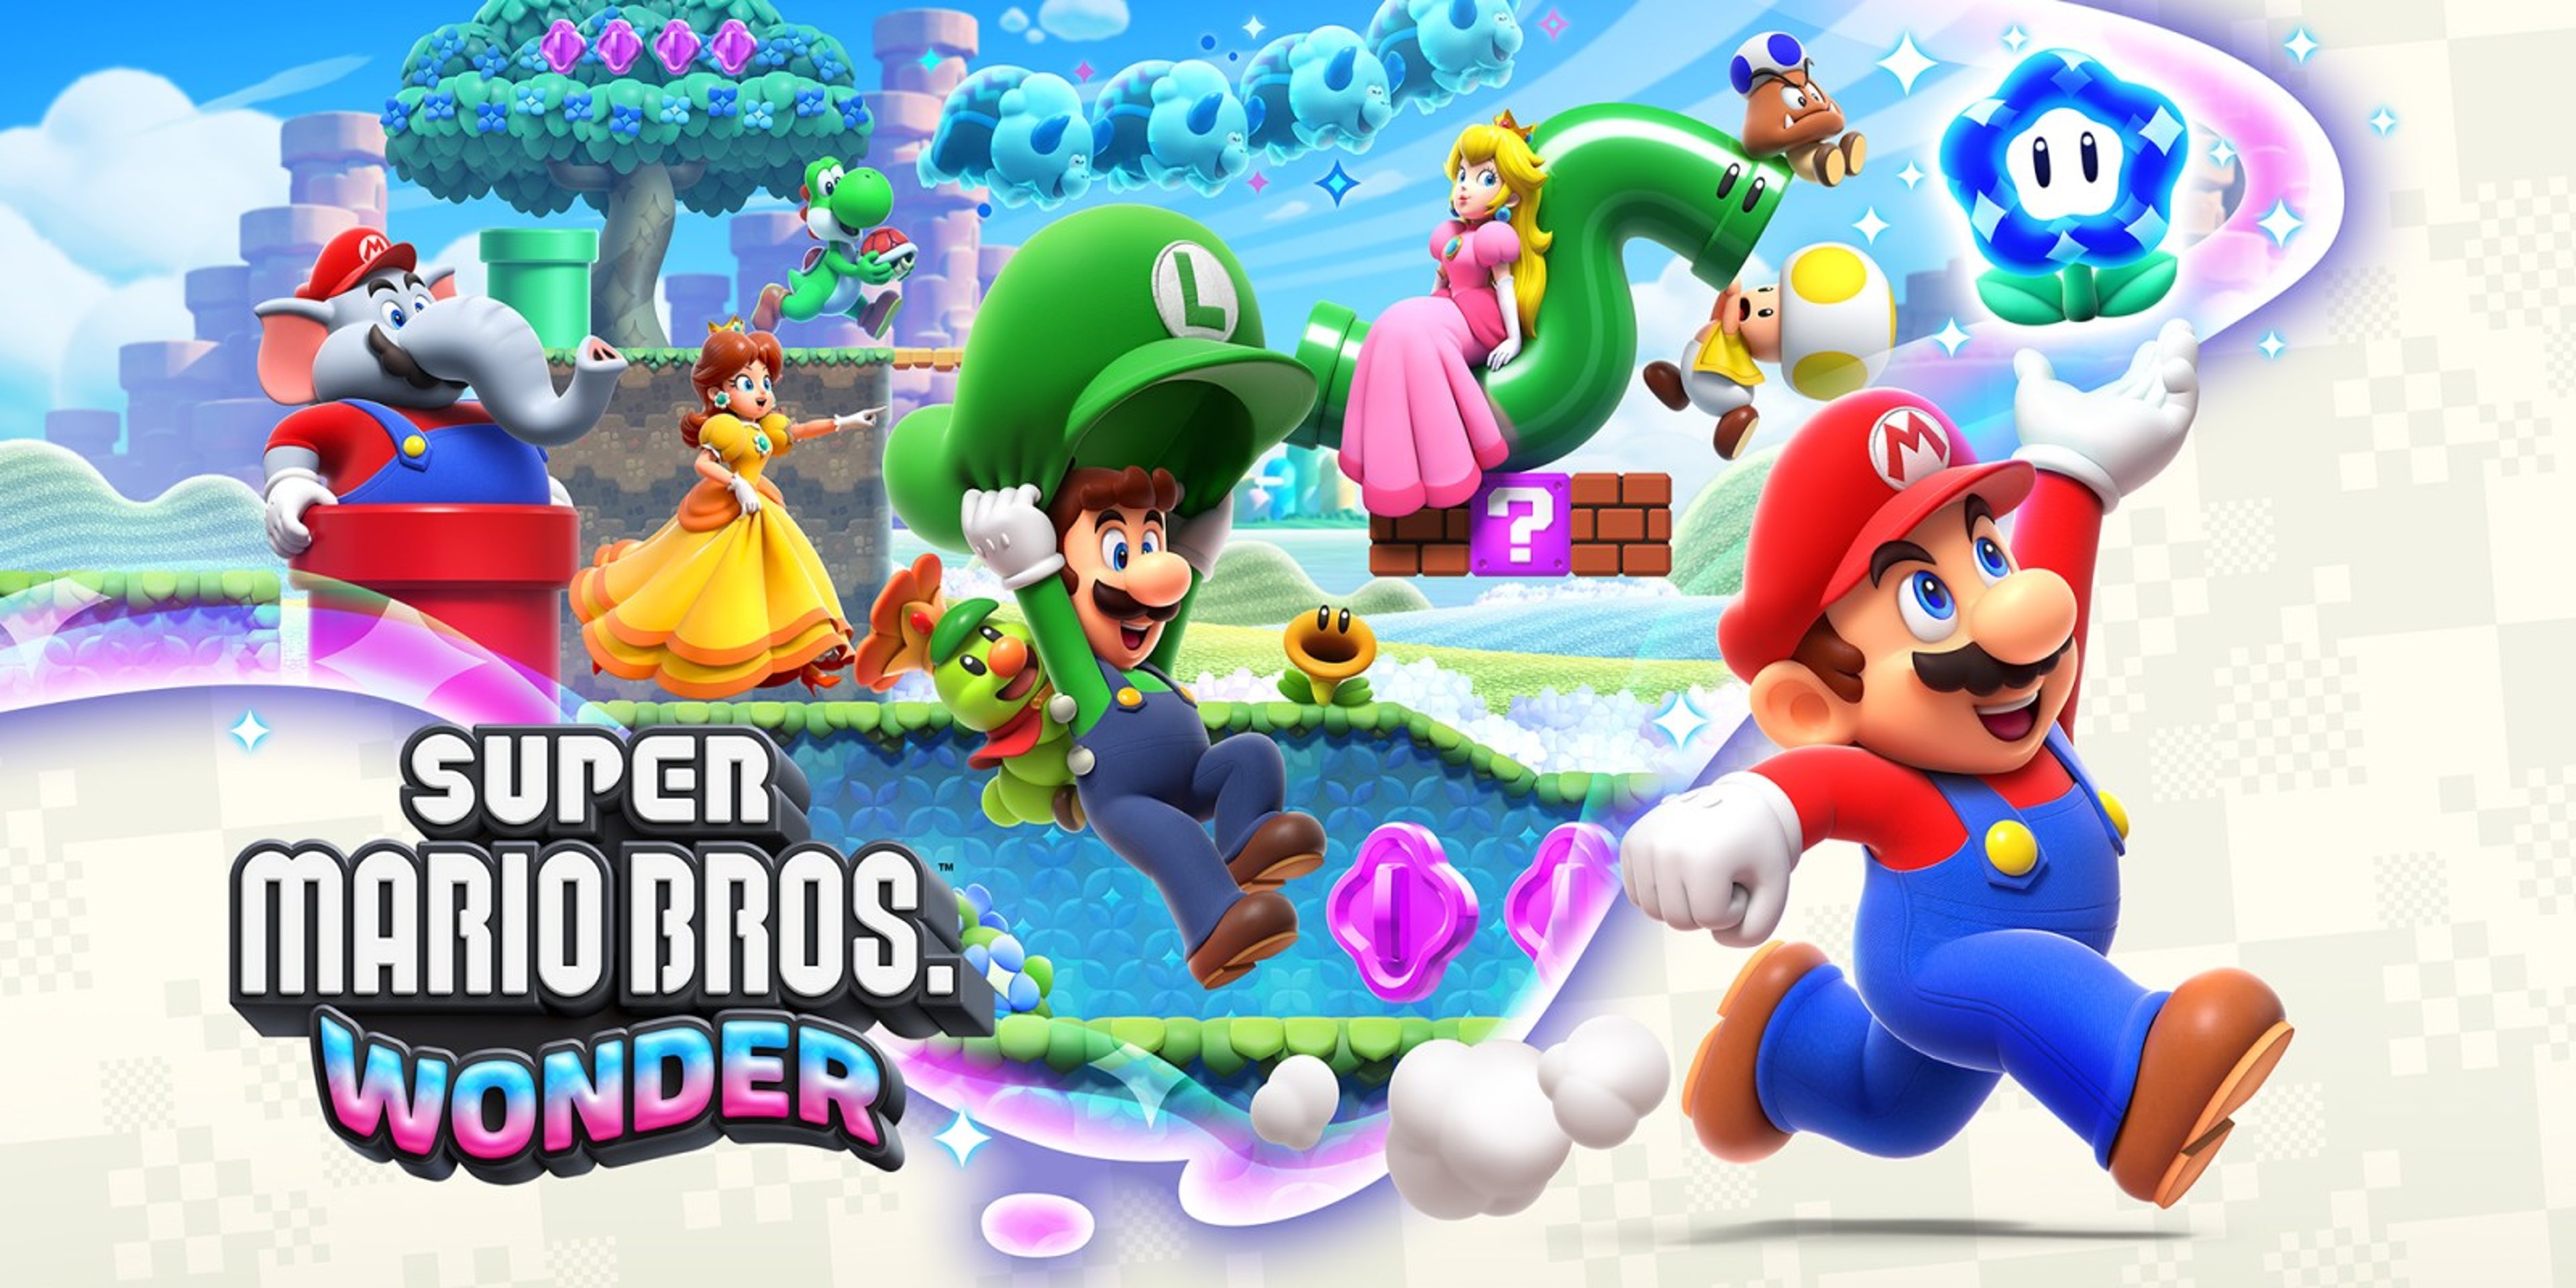 Super Mario Bros: Wonder